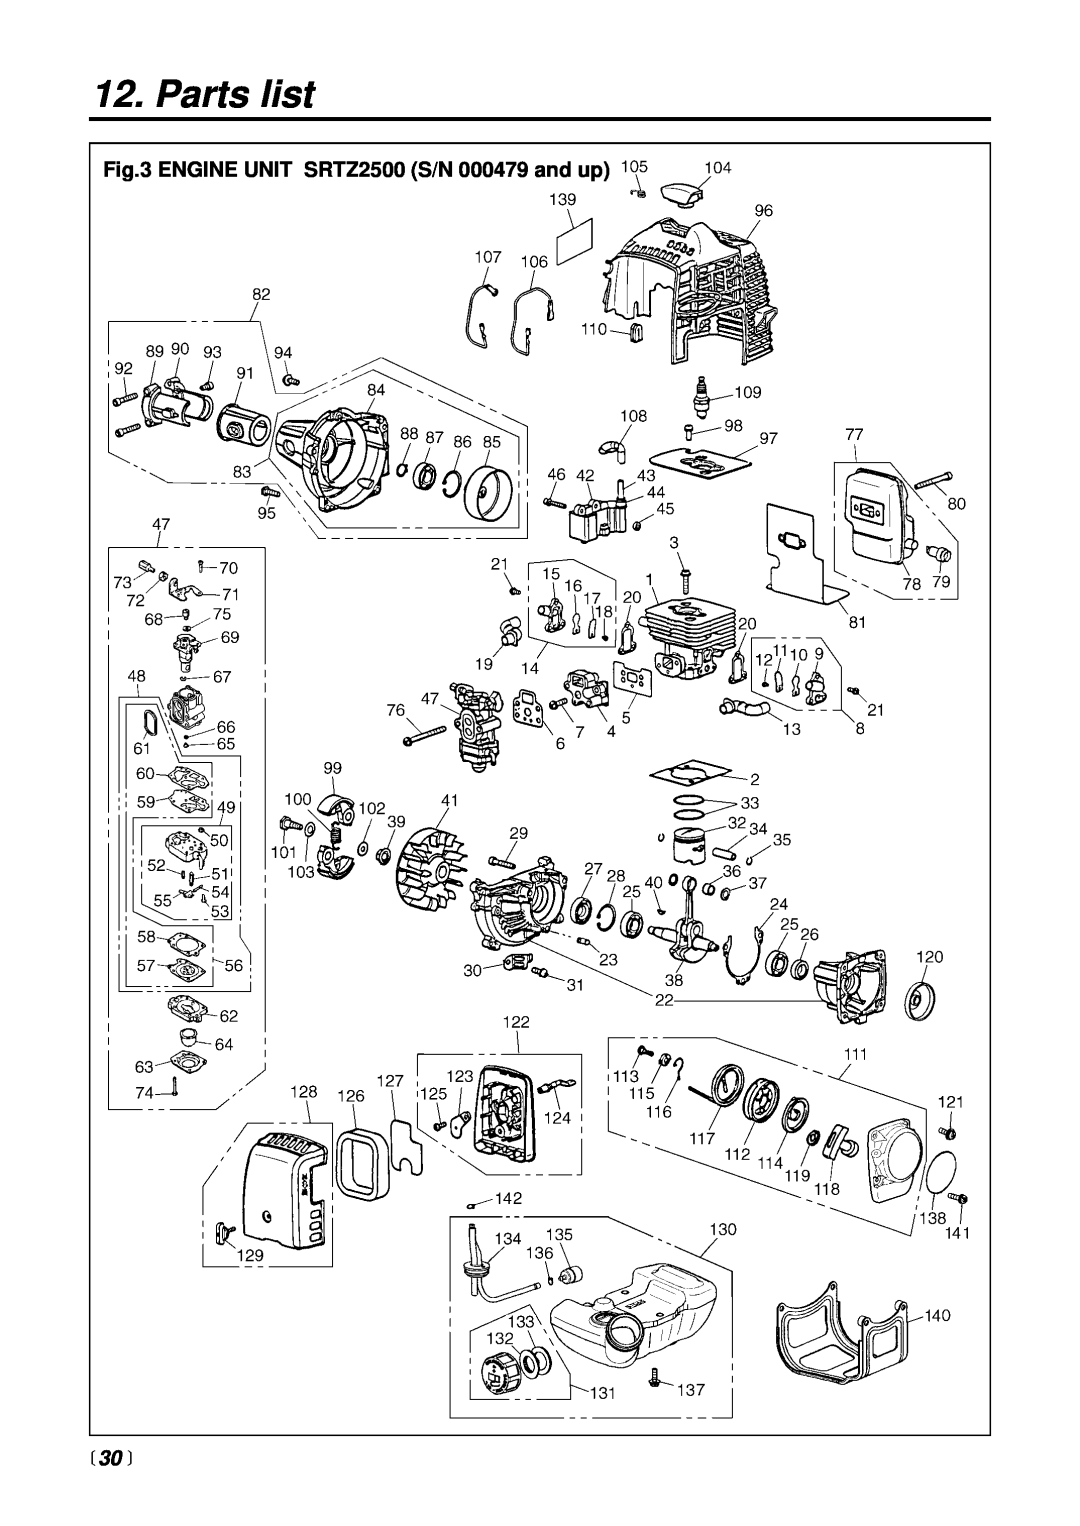 RedMax manual Parts list, ENGINE UNIT SRTZ2500 S/N 000479 and up,  30  